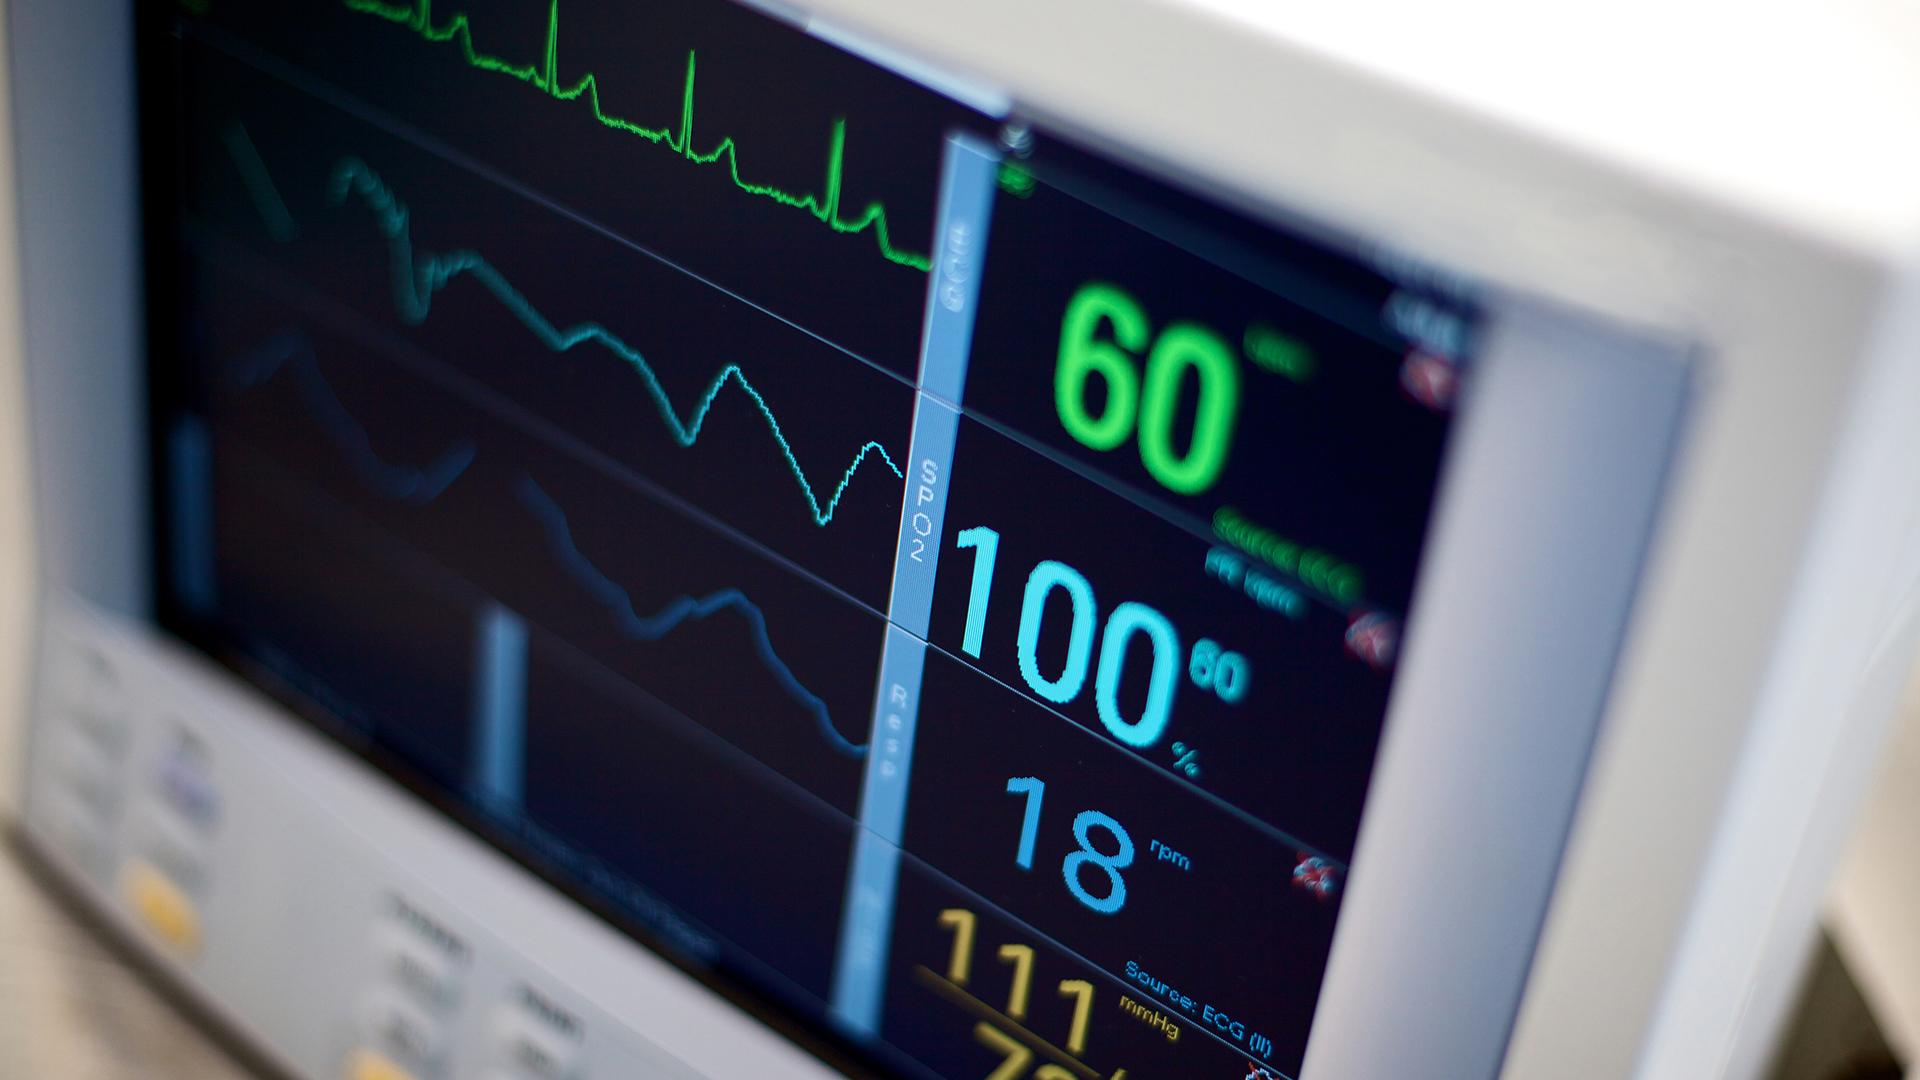 EKG hospital medical equipment vital statistics